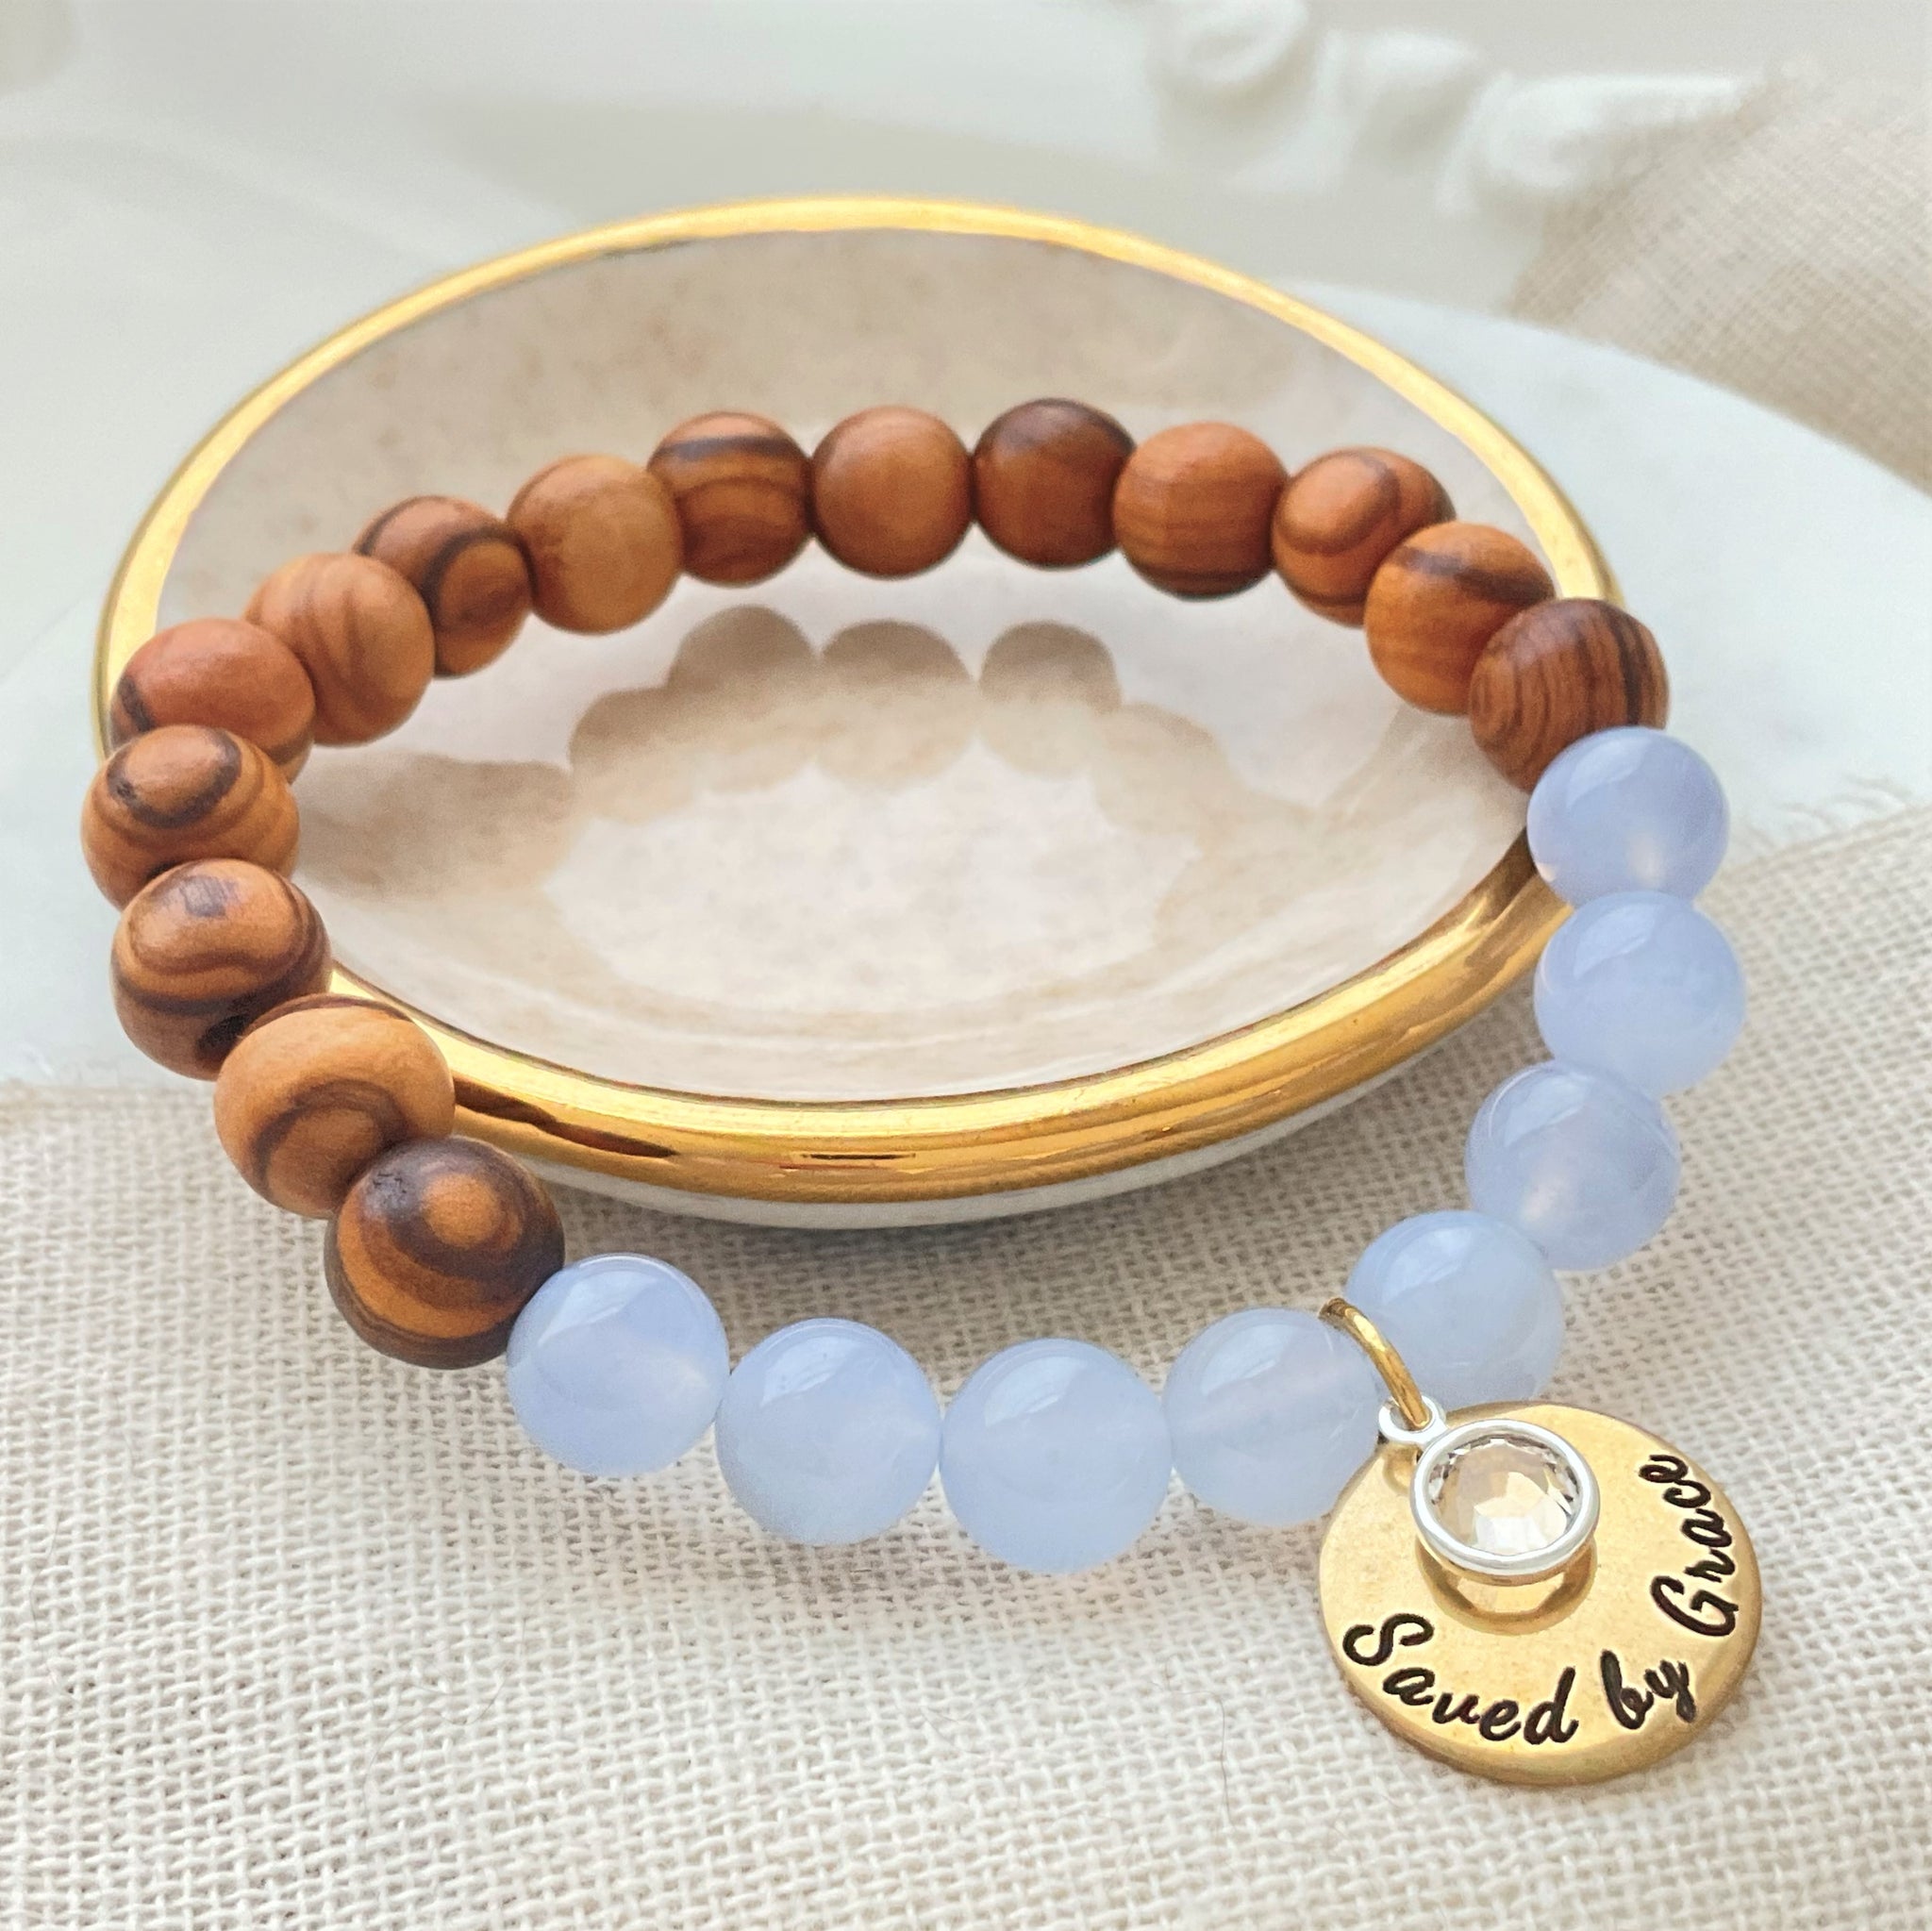 Stretch Bracelet | 6mm Beads (Lace Agate - Blue) Medium